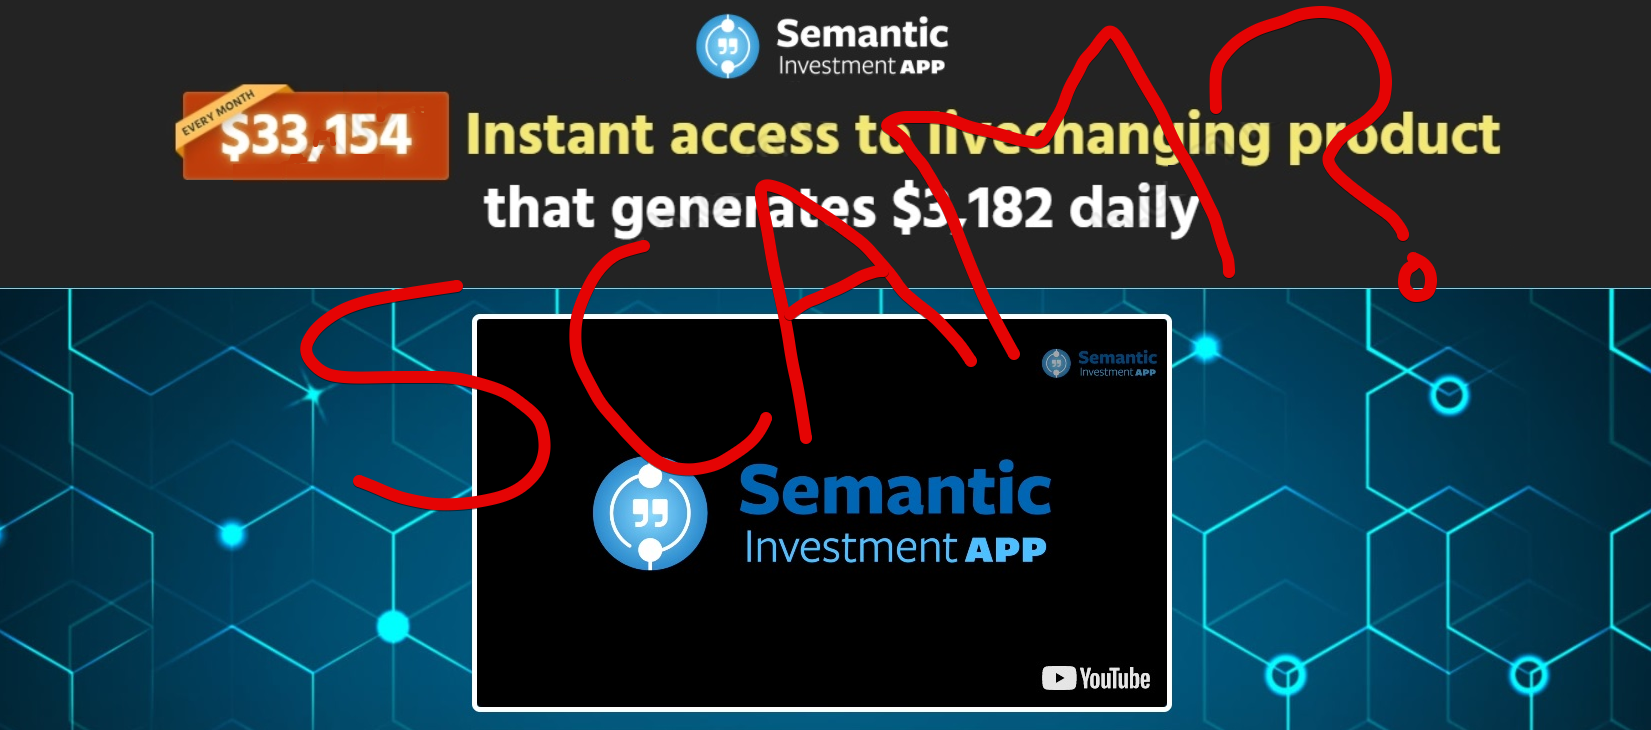 Semantic Investment App review